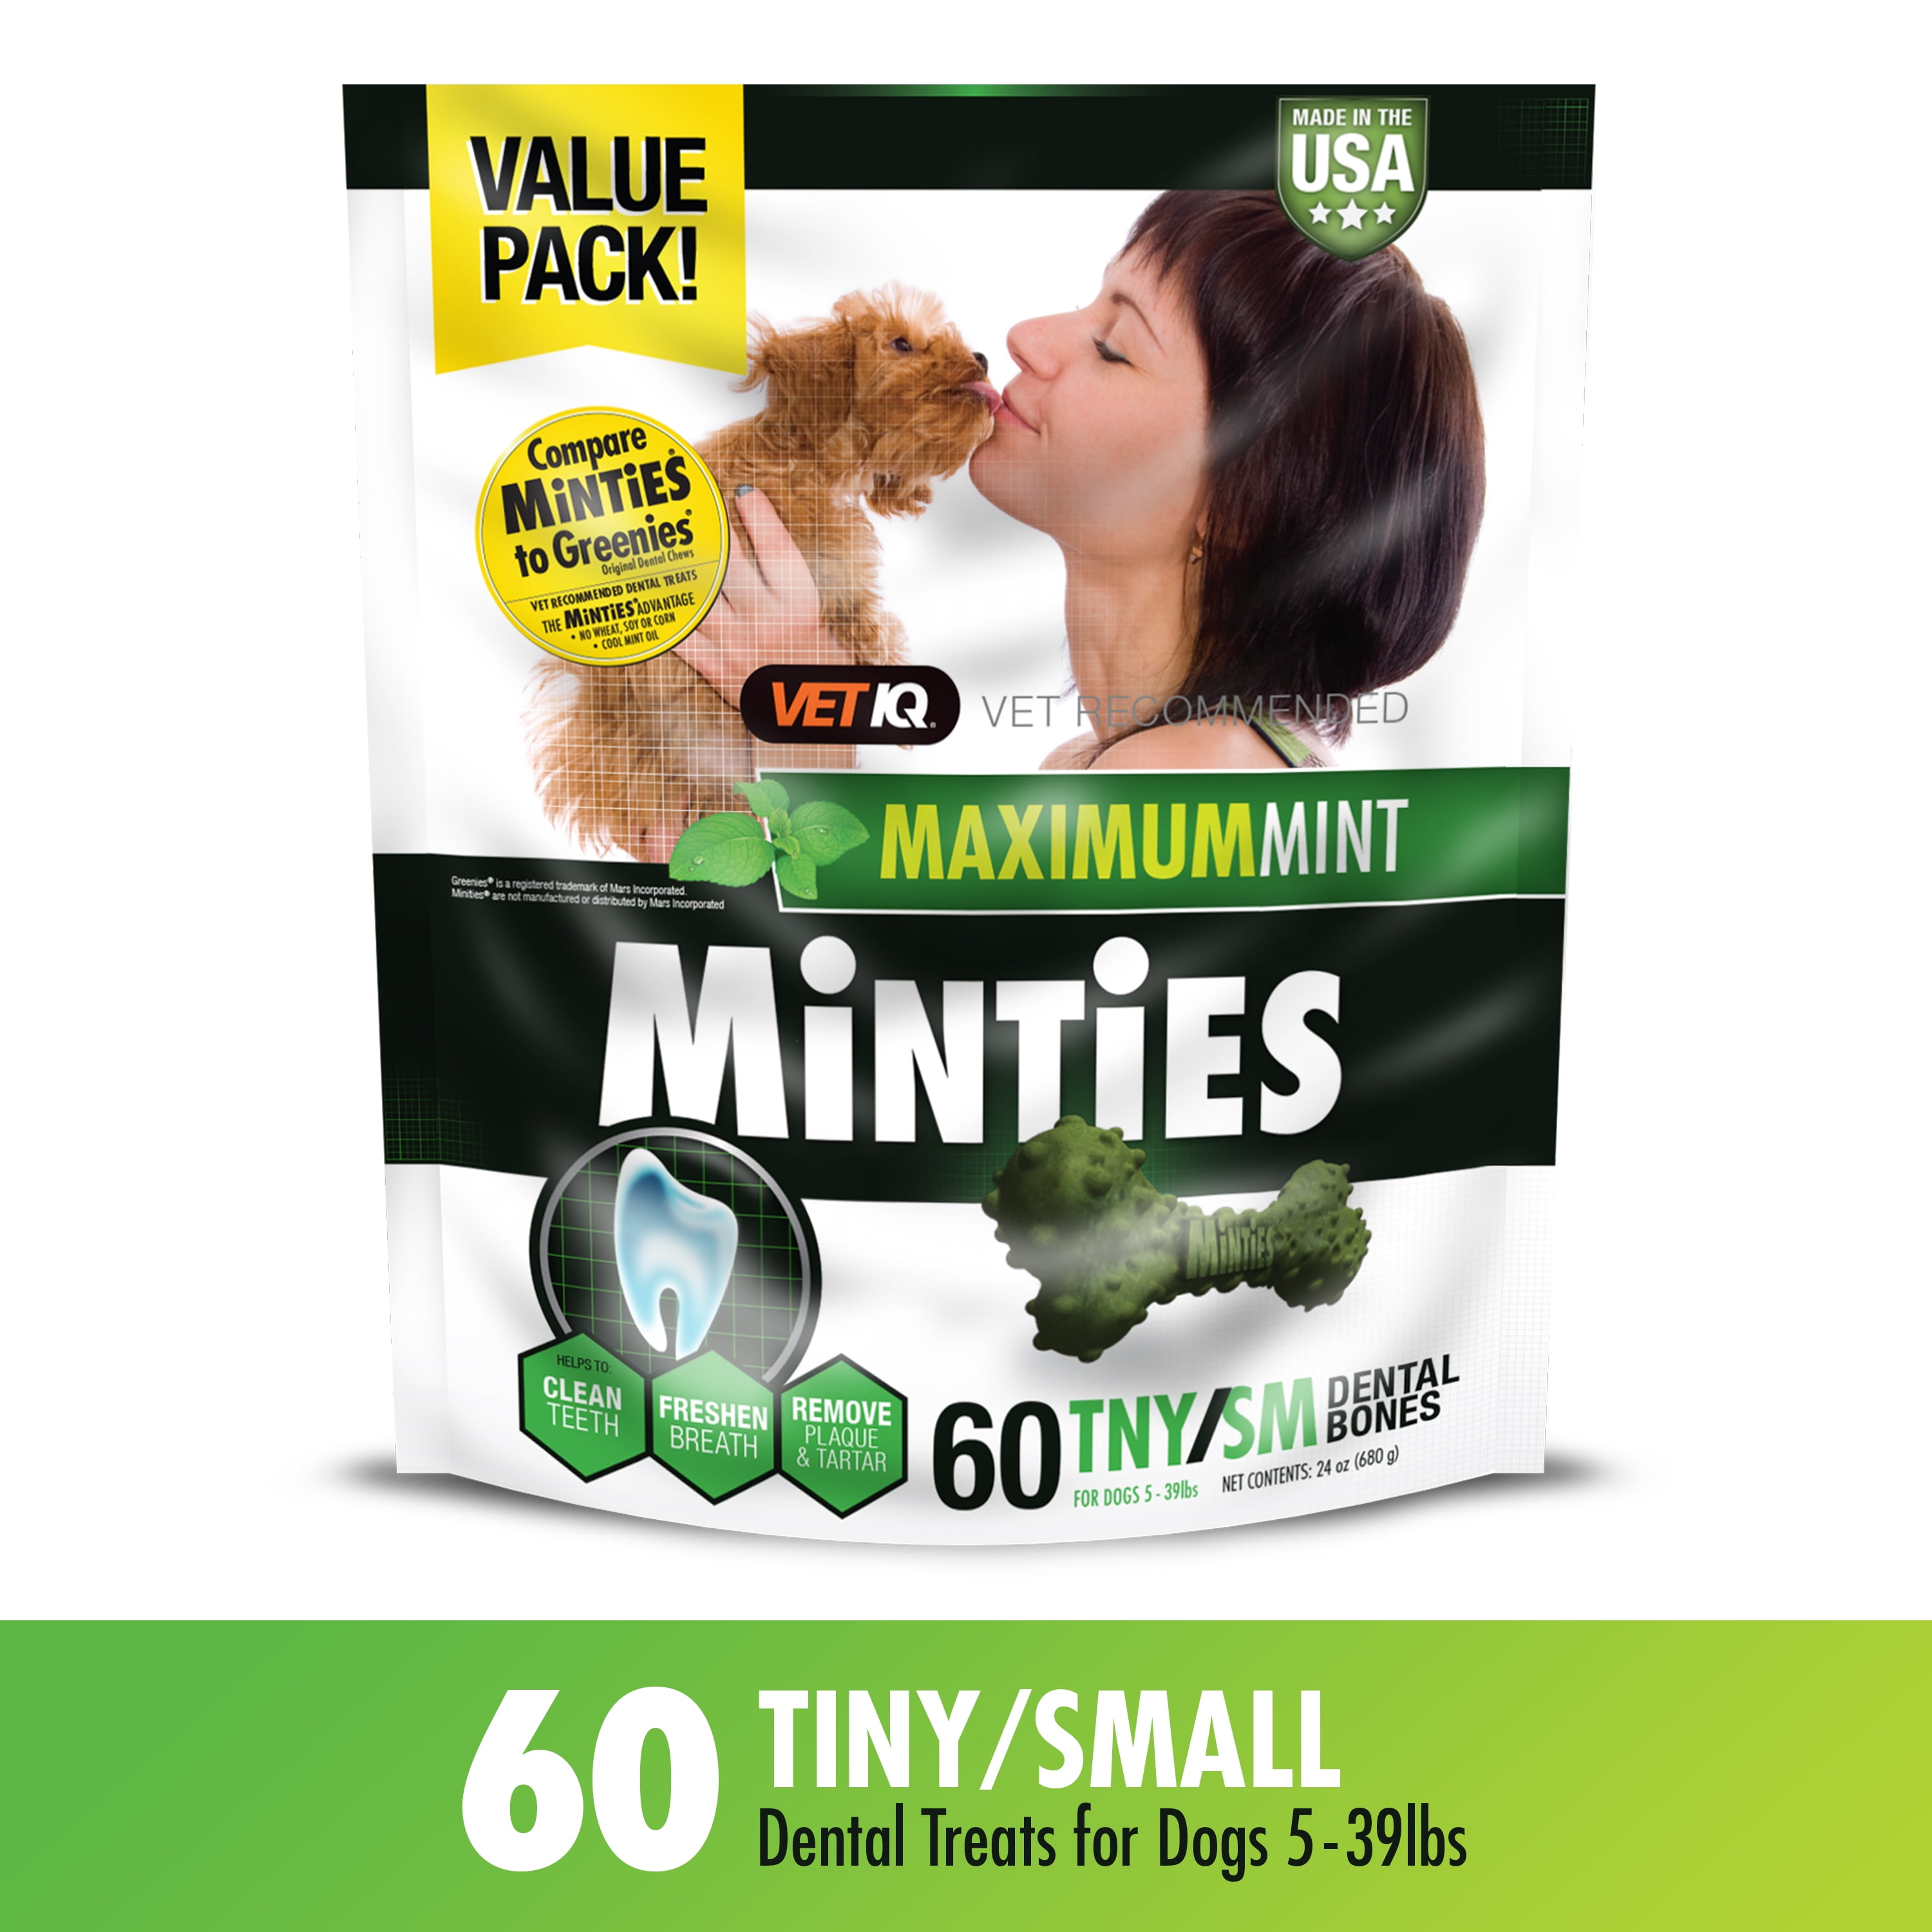 Minties Dental Dog Treats 40 ct Five Natural Breath Fresheners Maximum Mint 